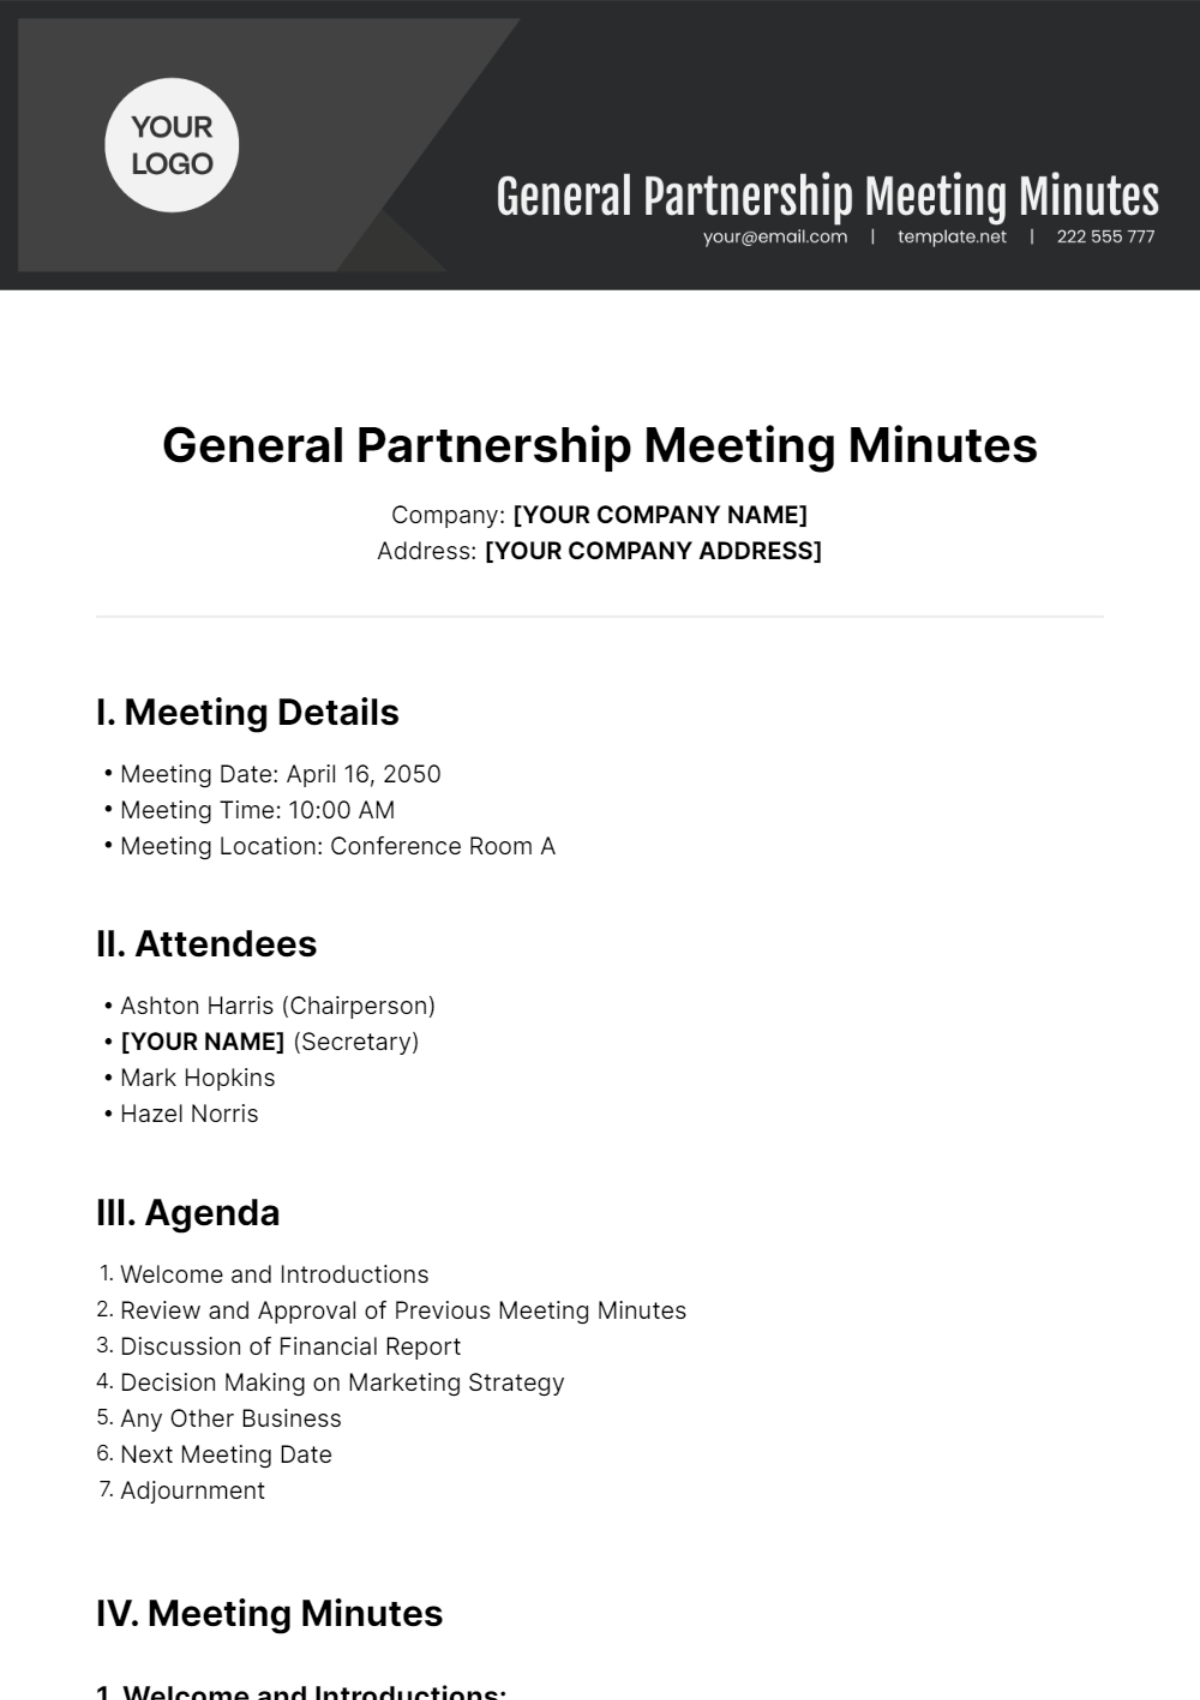 General Partnership Meeting Minutes Template